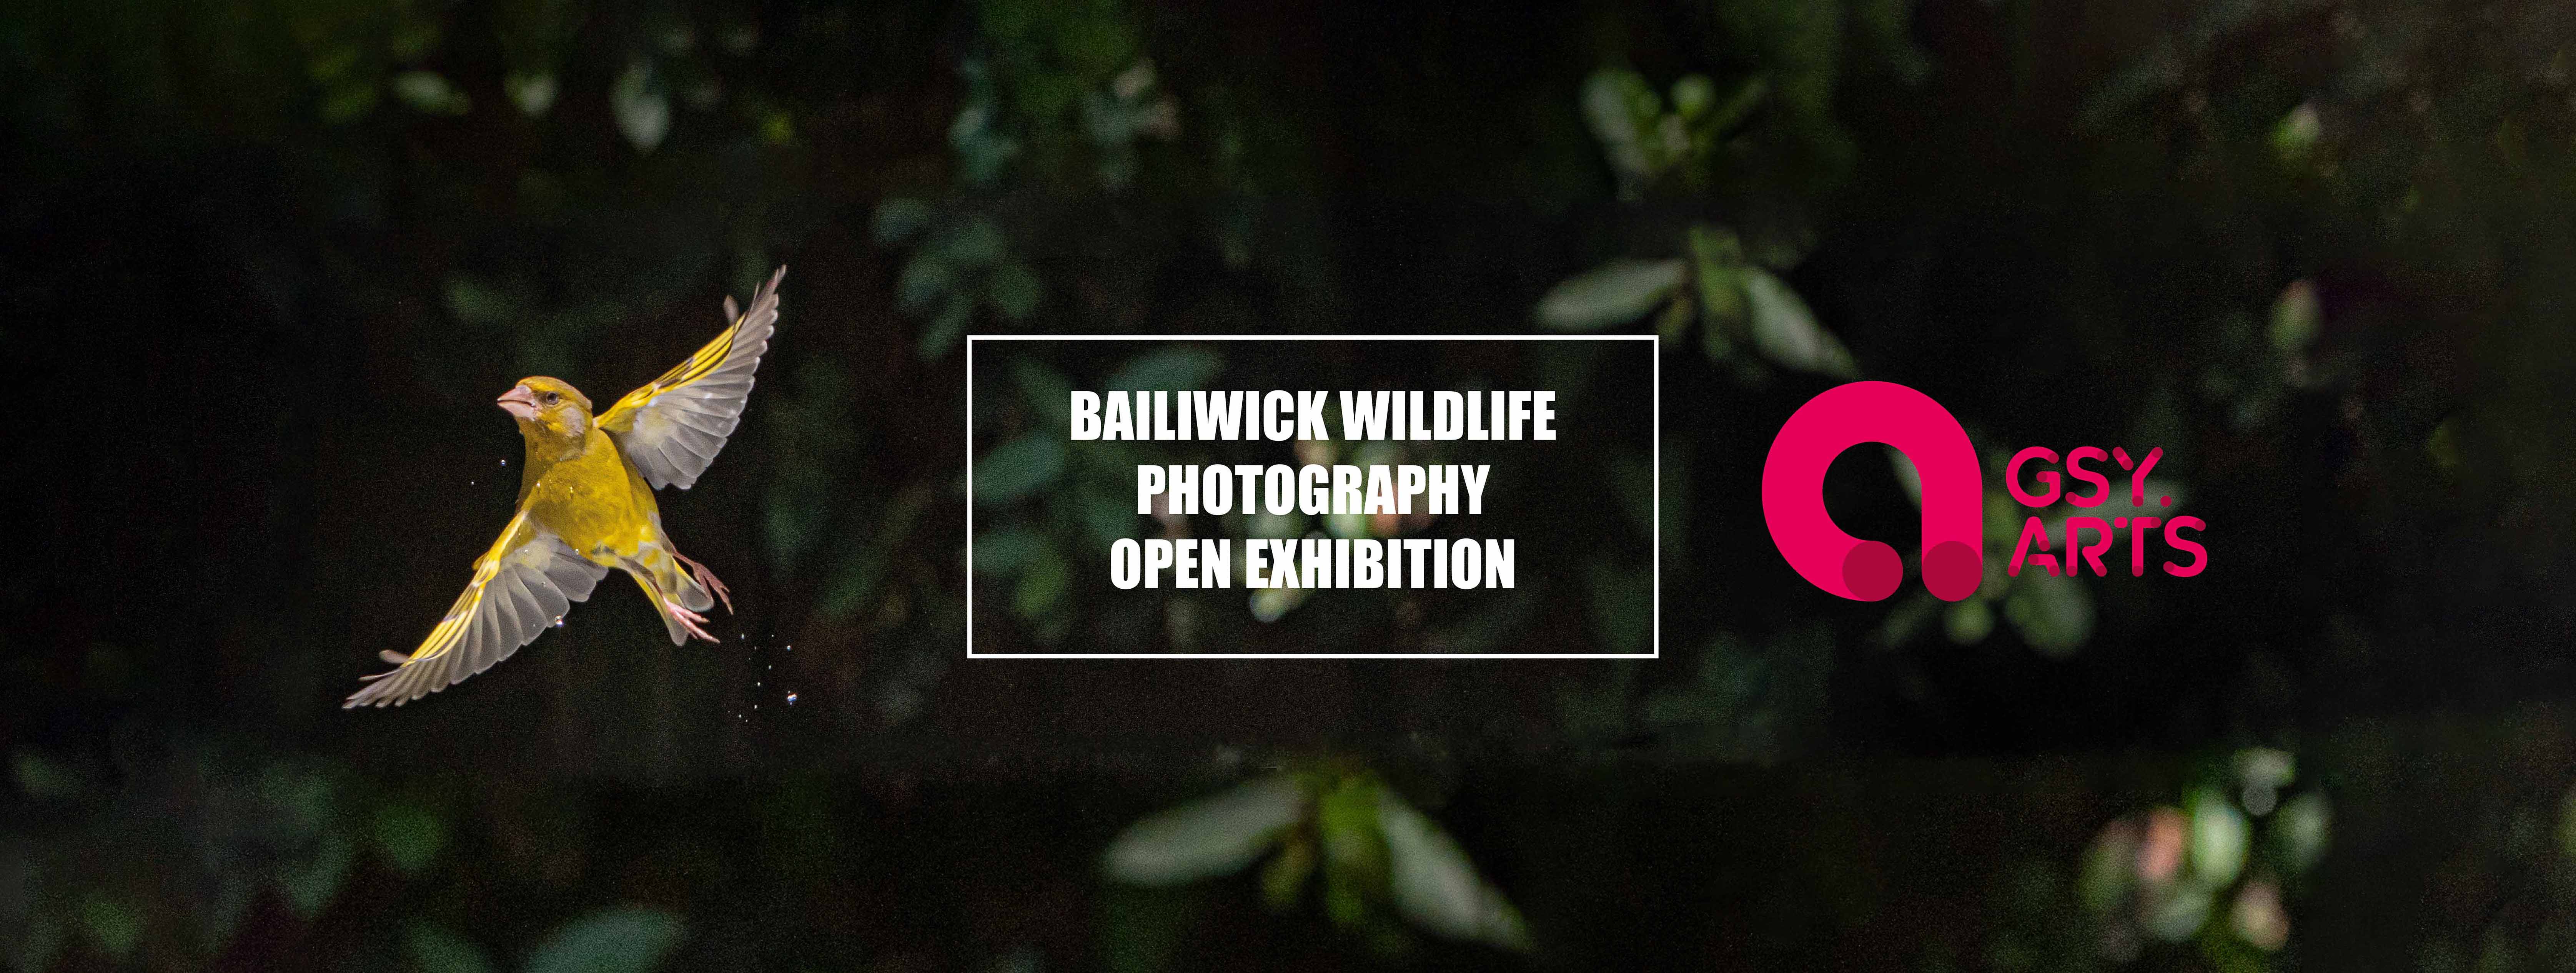 Guernsey Arts Wildlife Photographer open